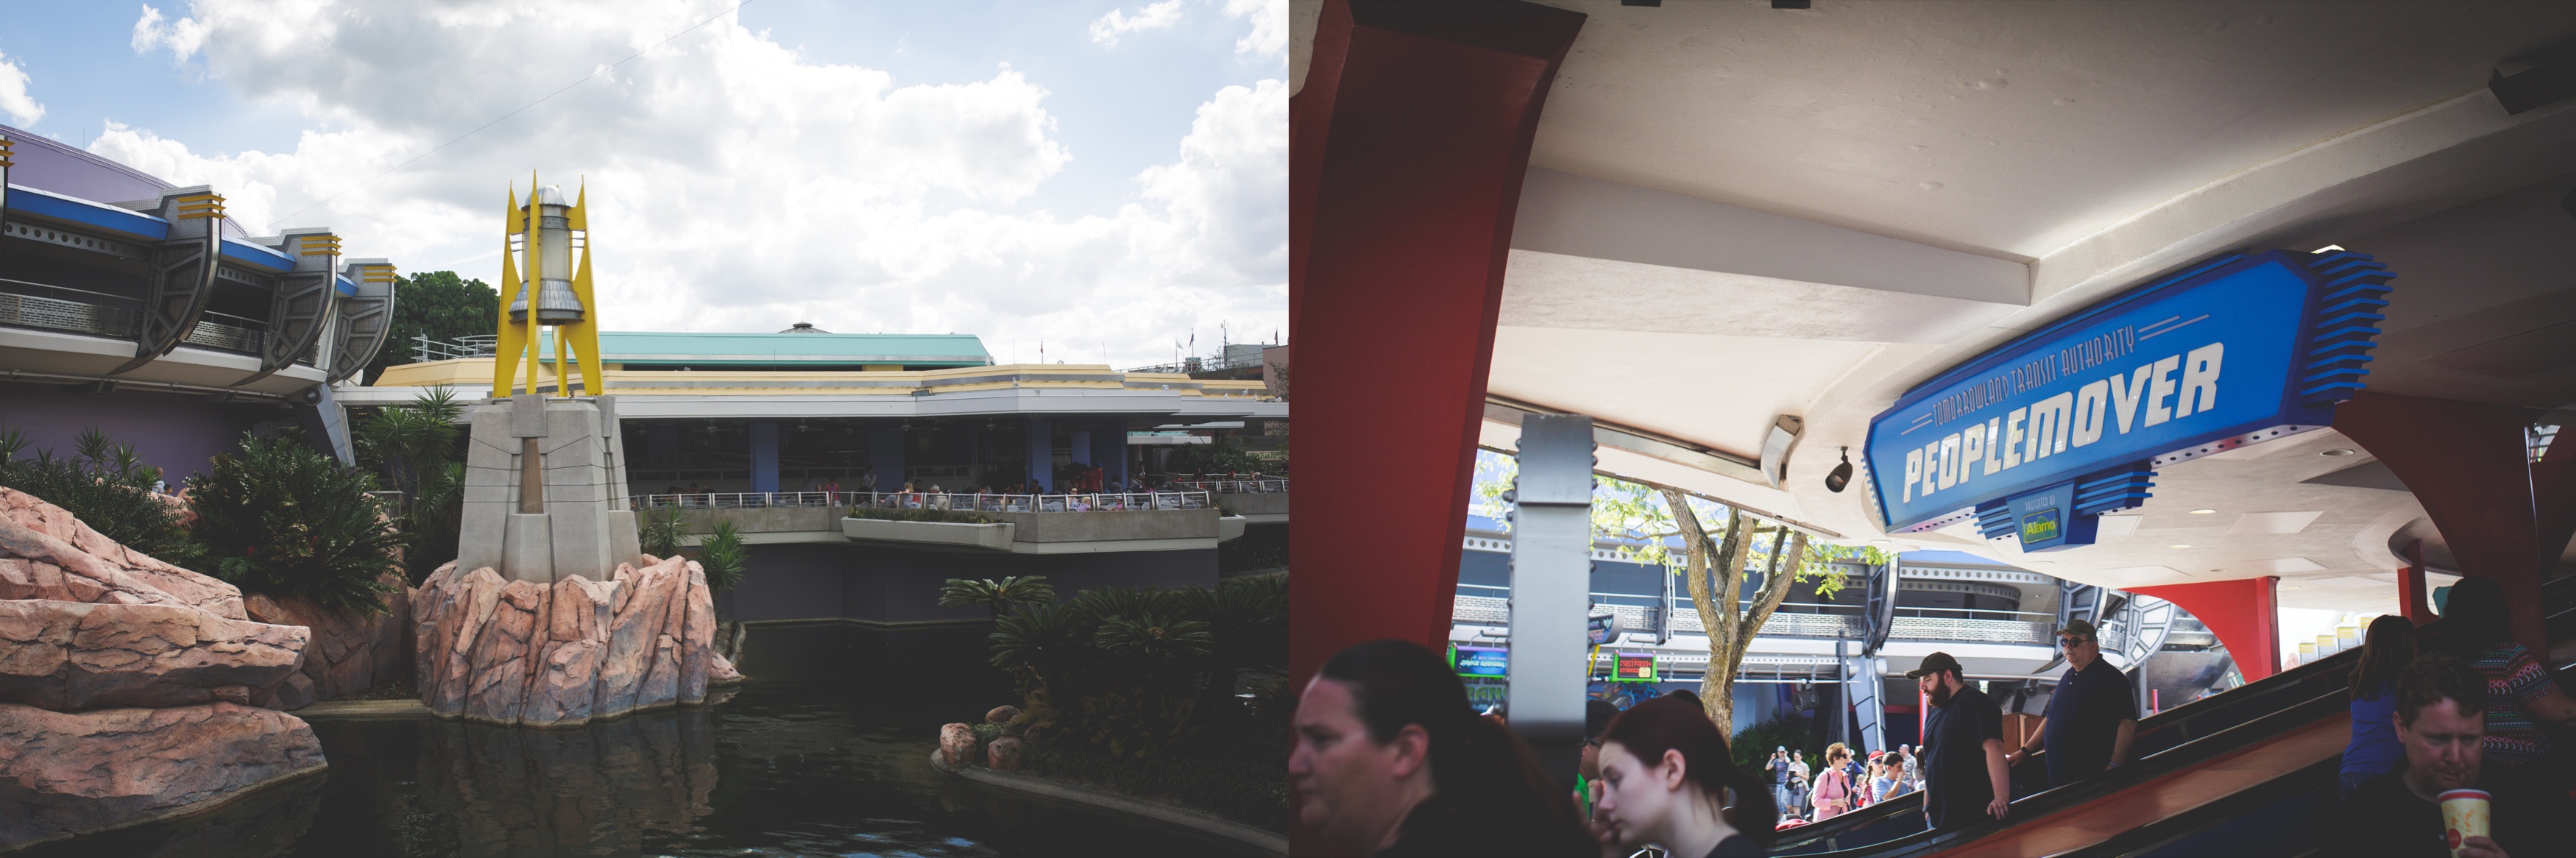 Tomorrowland Transit Authority PeopleMover, Magic Kingdom, Walt Disney World, Magic for Miles